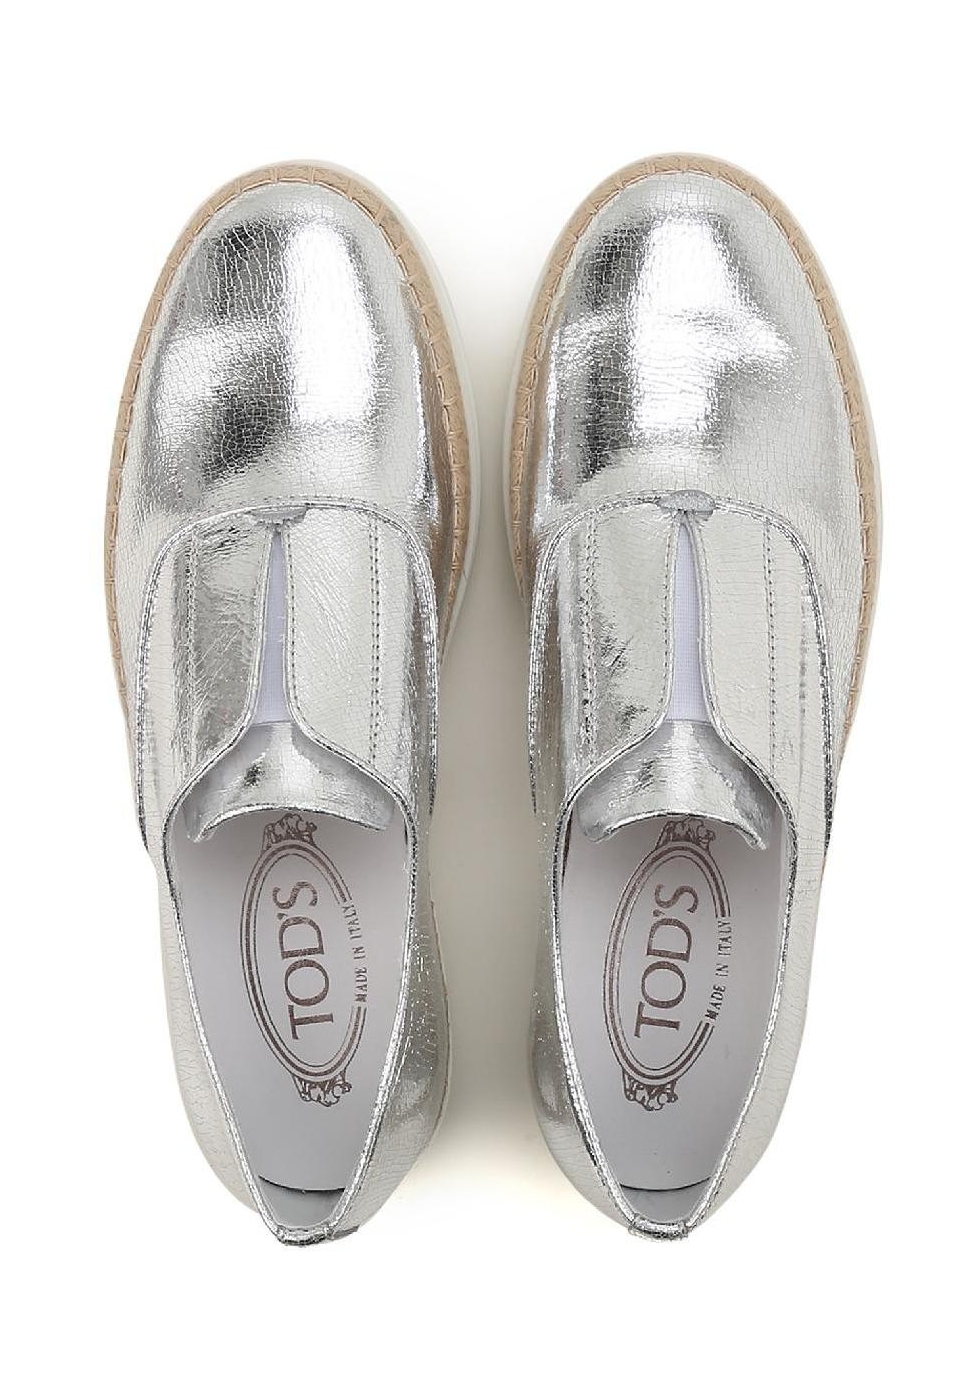 Tod's women's silver metallic leather slipon sneakers